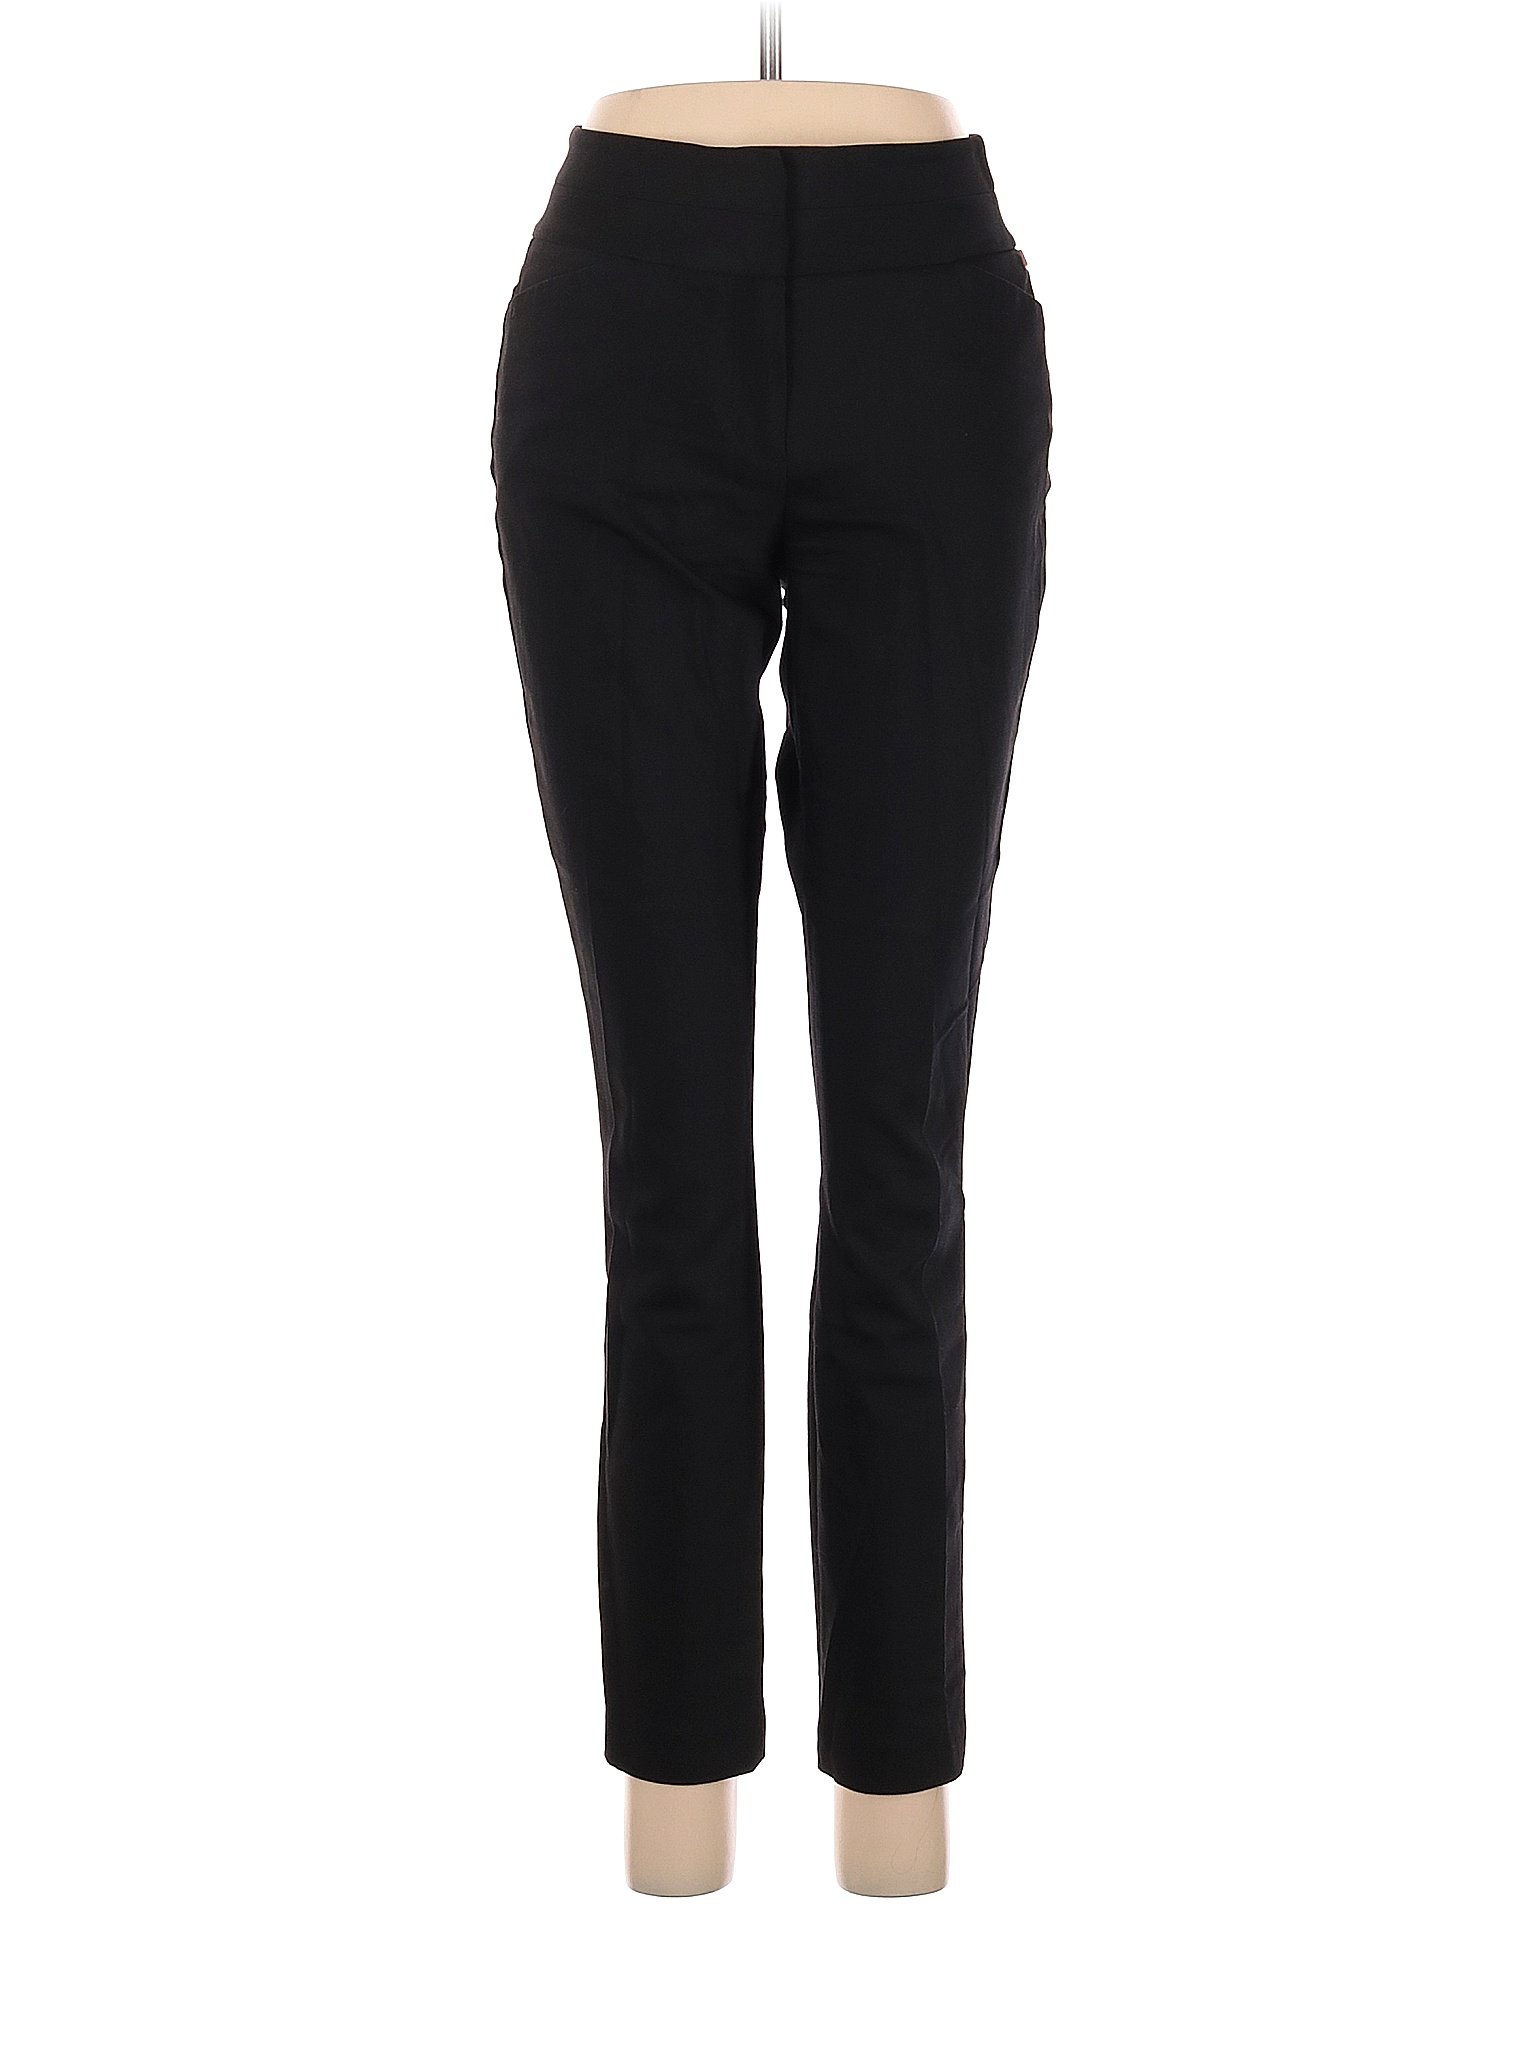 Ivanka Trump Solid Black Dress Pants Size 4 - 79% off | thredUP